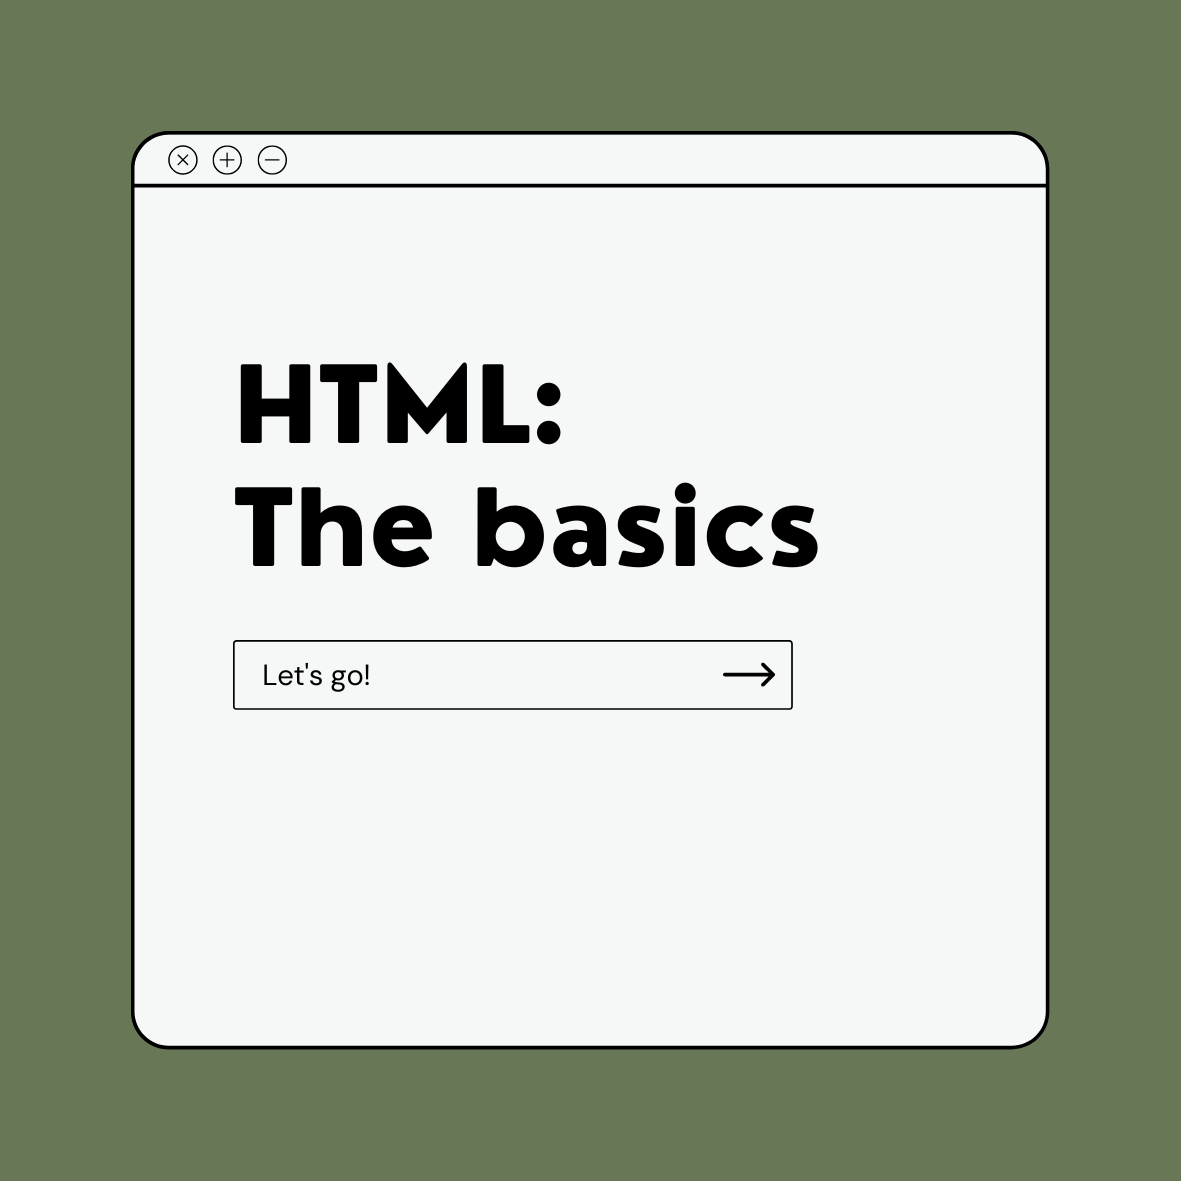 The basics of HTML